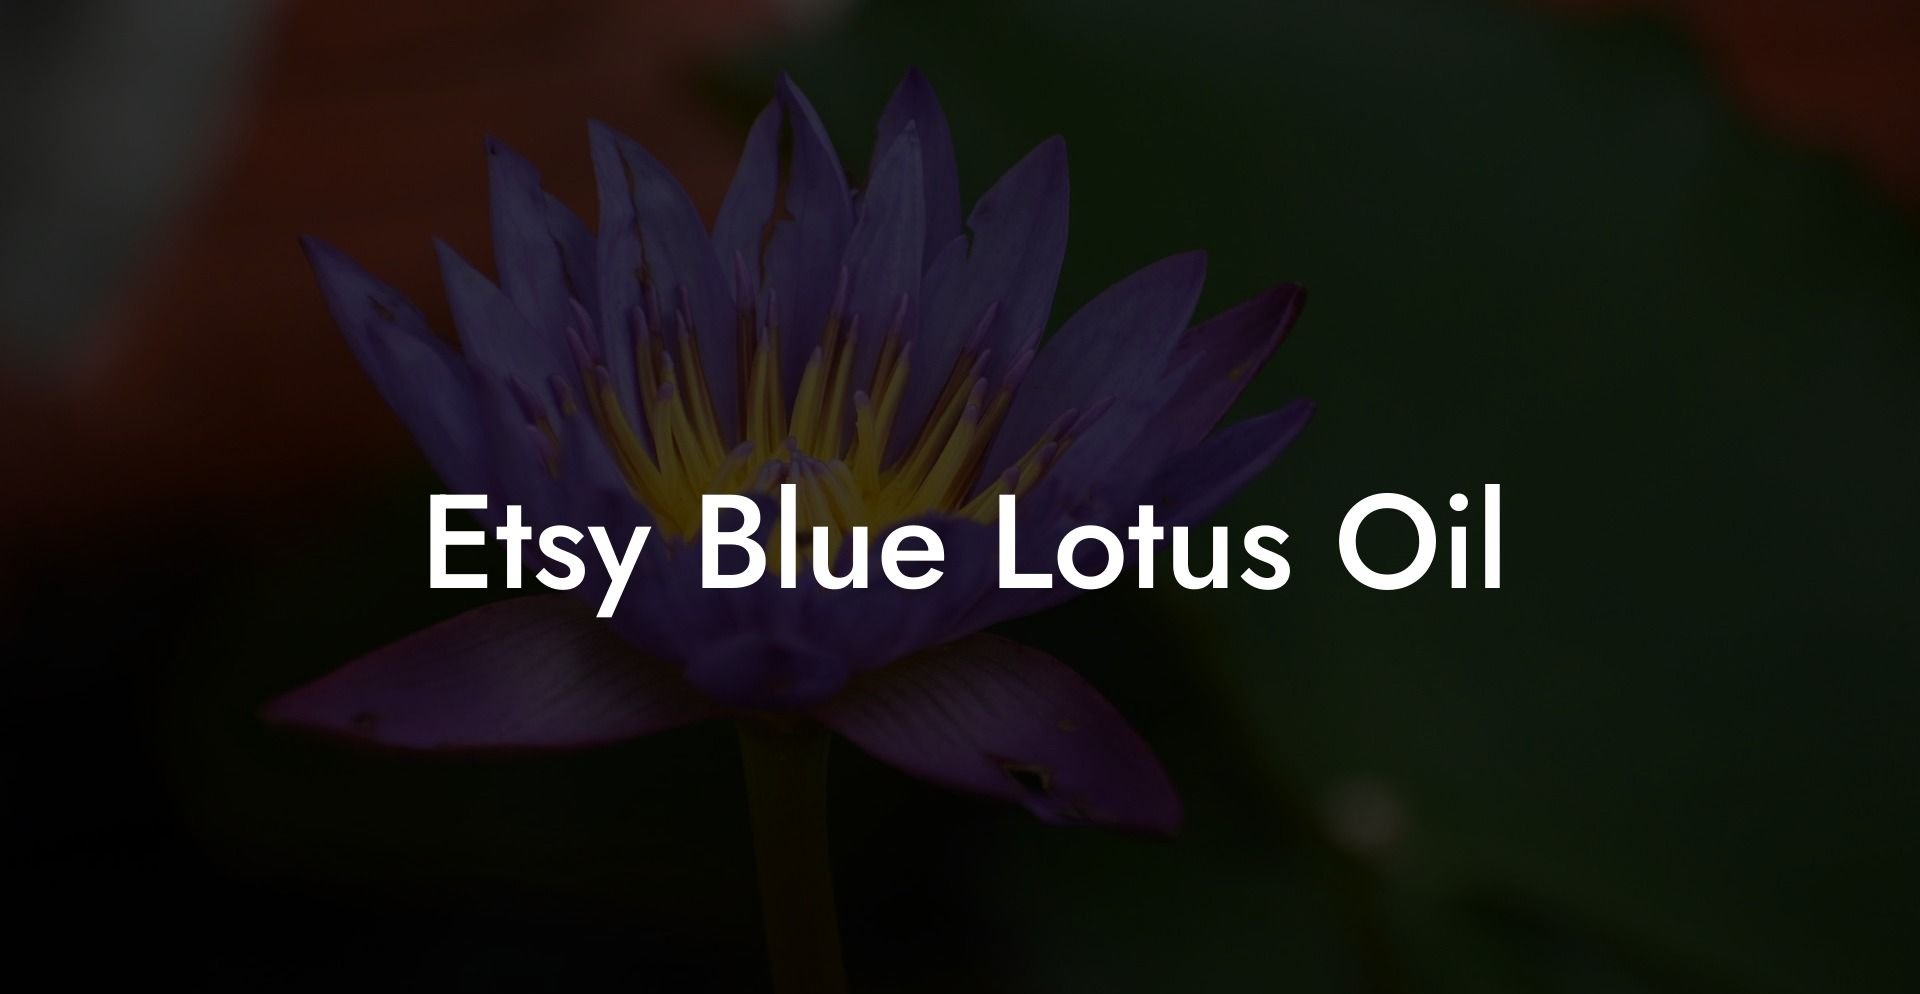 Etsy Blue Lotus Oil